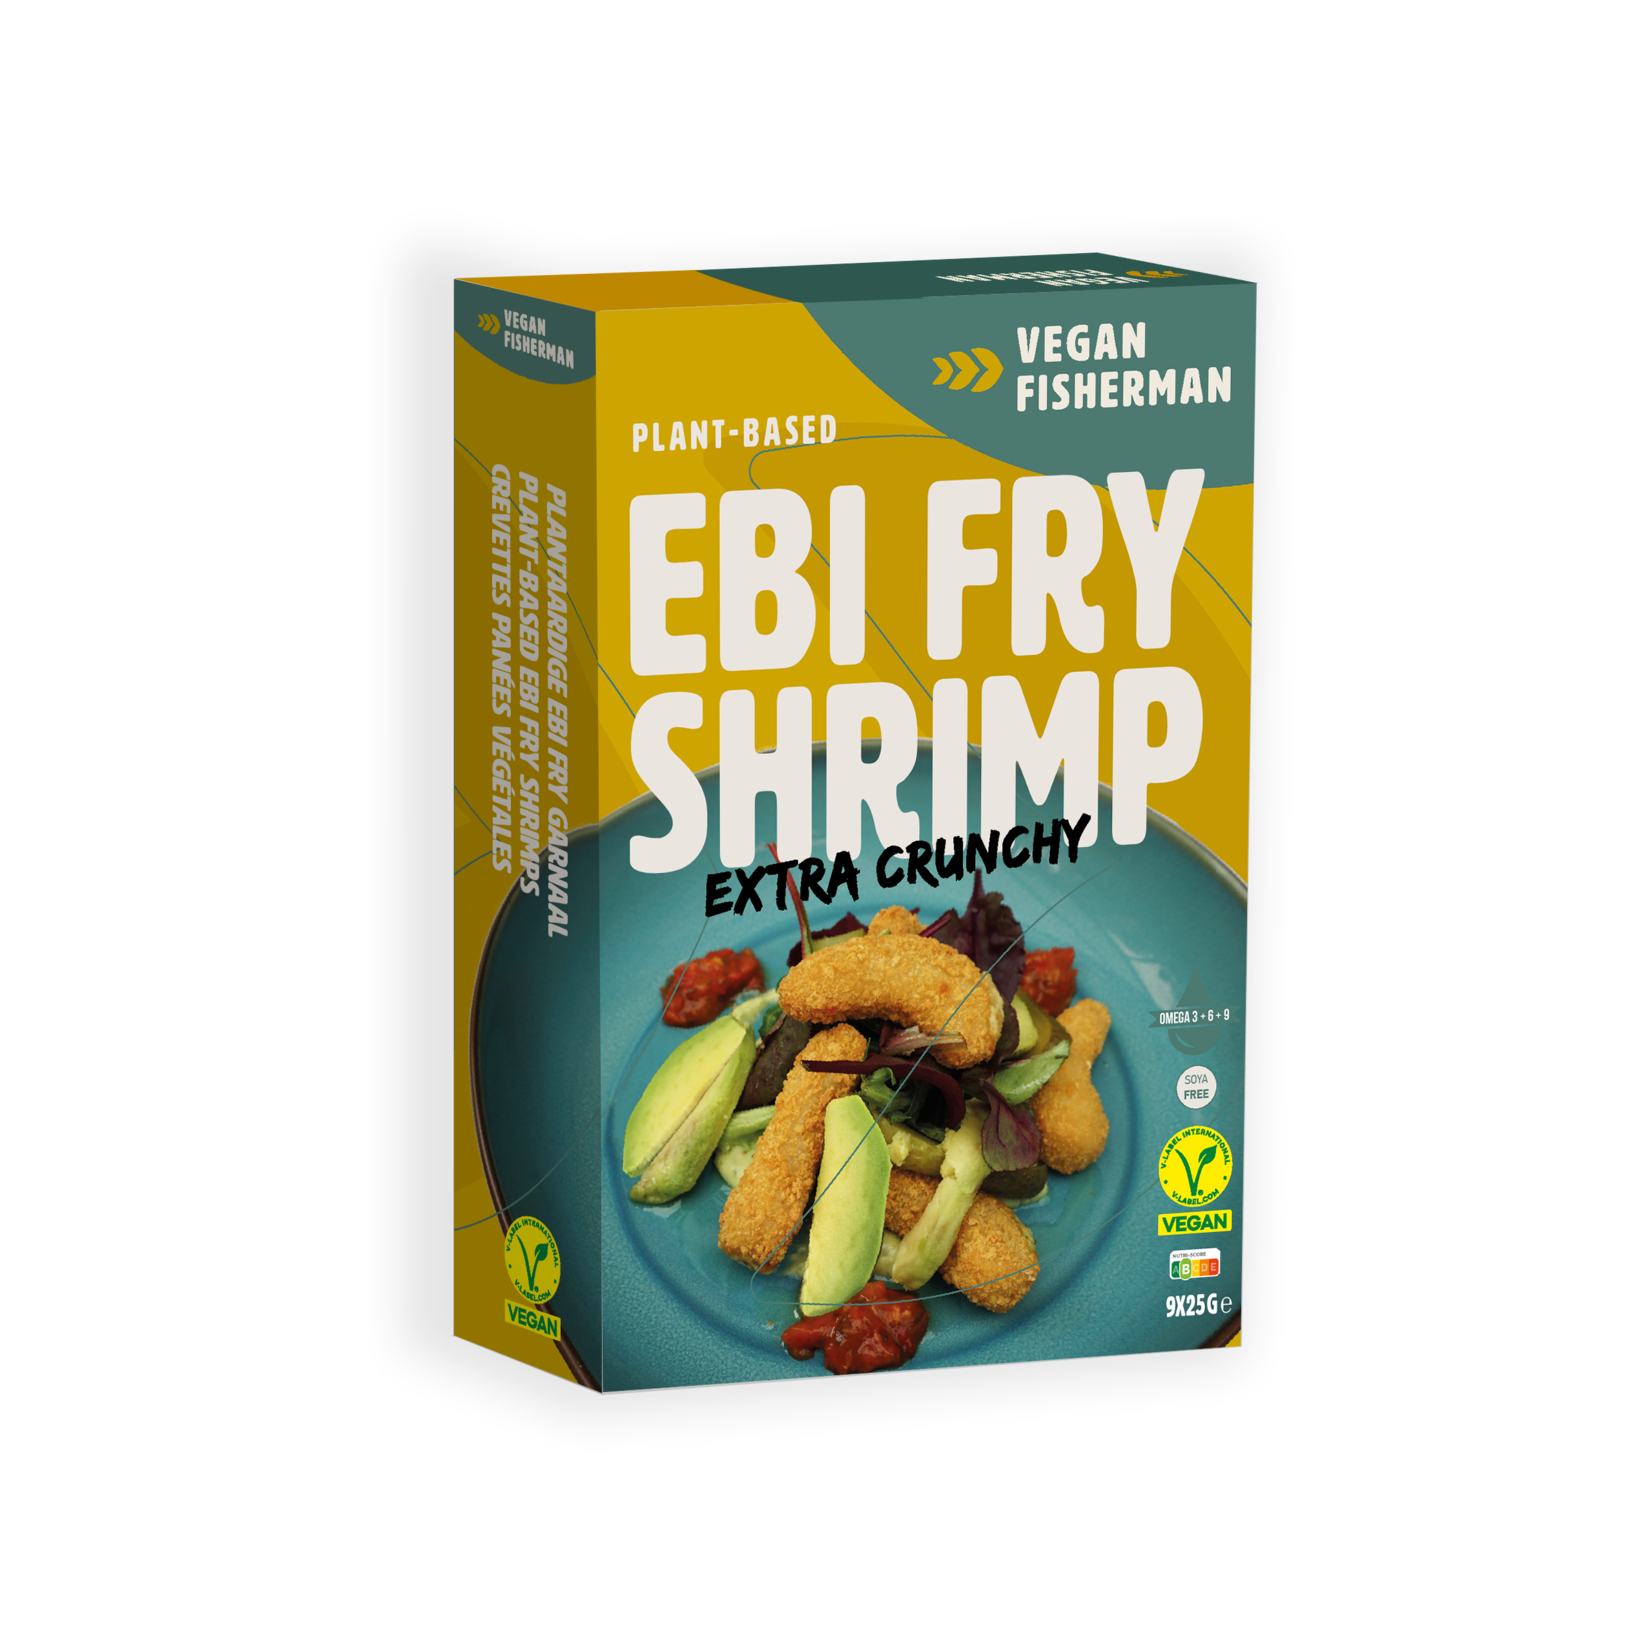 Vegan Visboer - Vegan Fisherman Tasting box: Burgers 100 gr, Filet, Fish Stick, Chunks, Shrimp, Fish Fries.